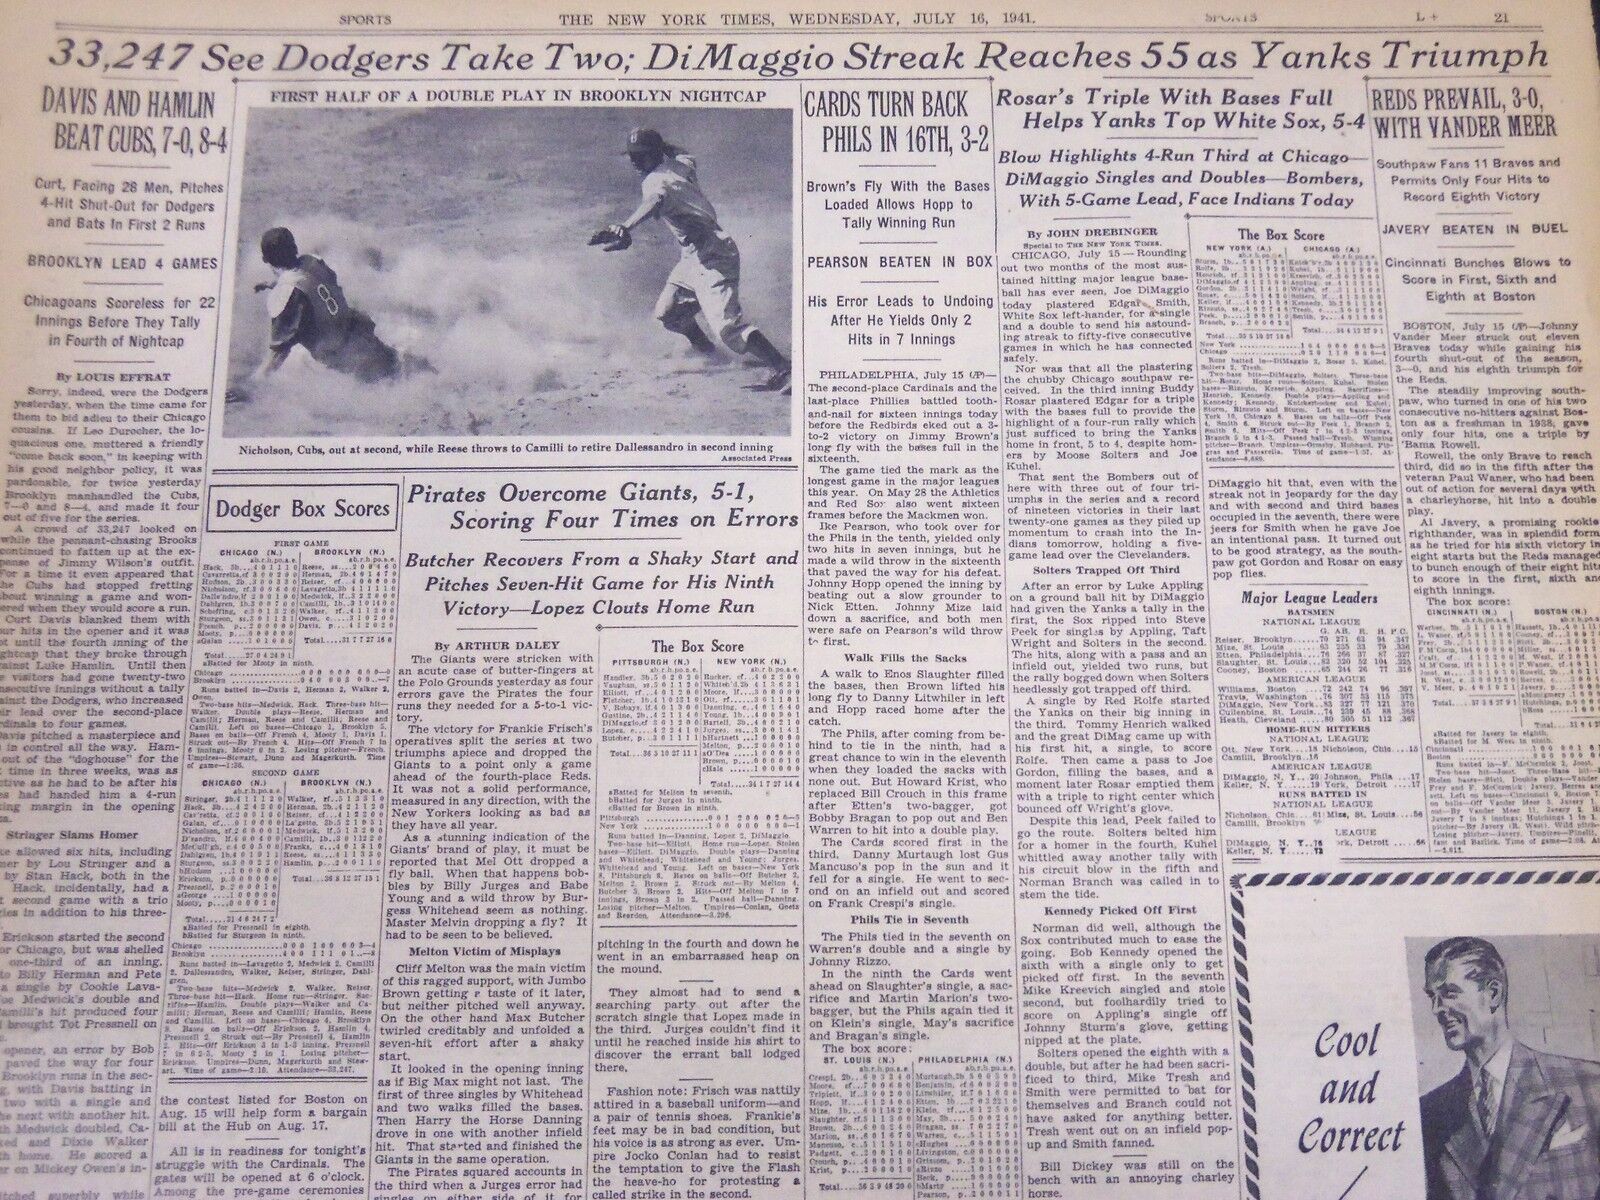 1941 JULY 16 NEW YORK TIMES - DIMAGGIO STREAK REACHES 55 - NT 5158